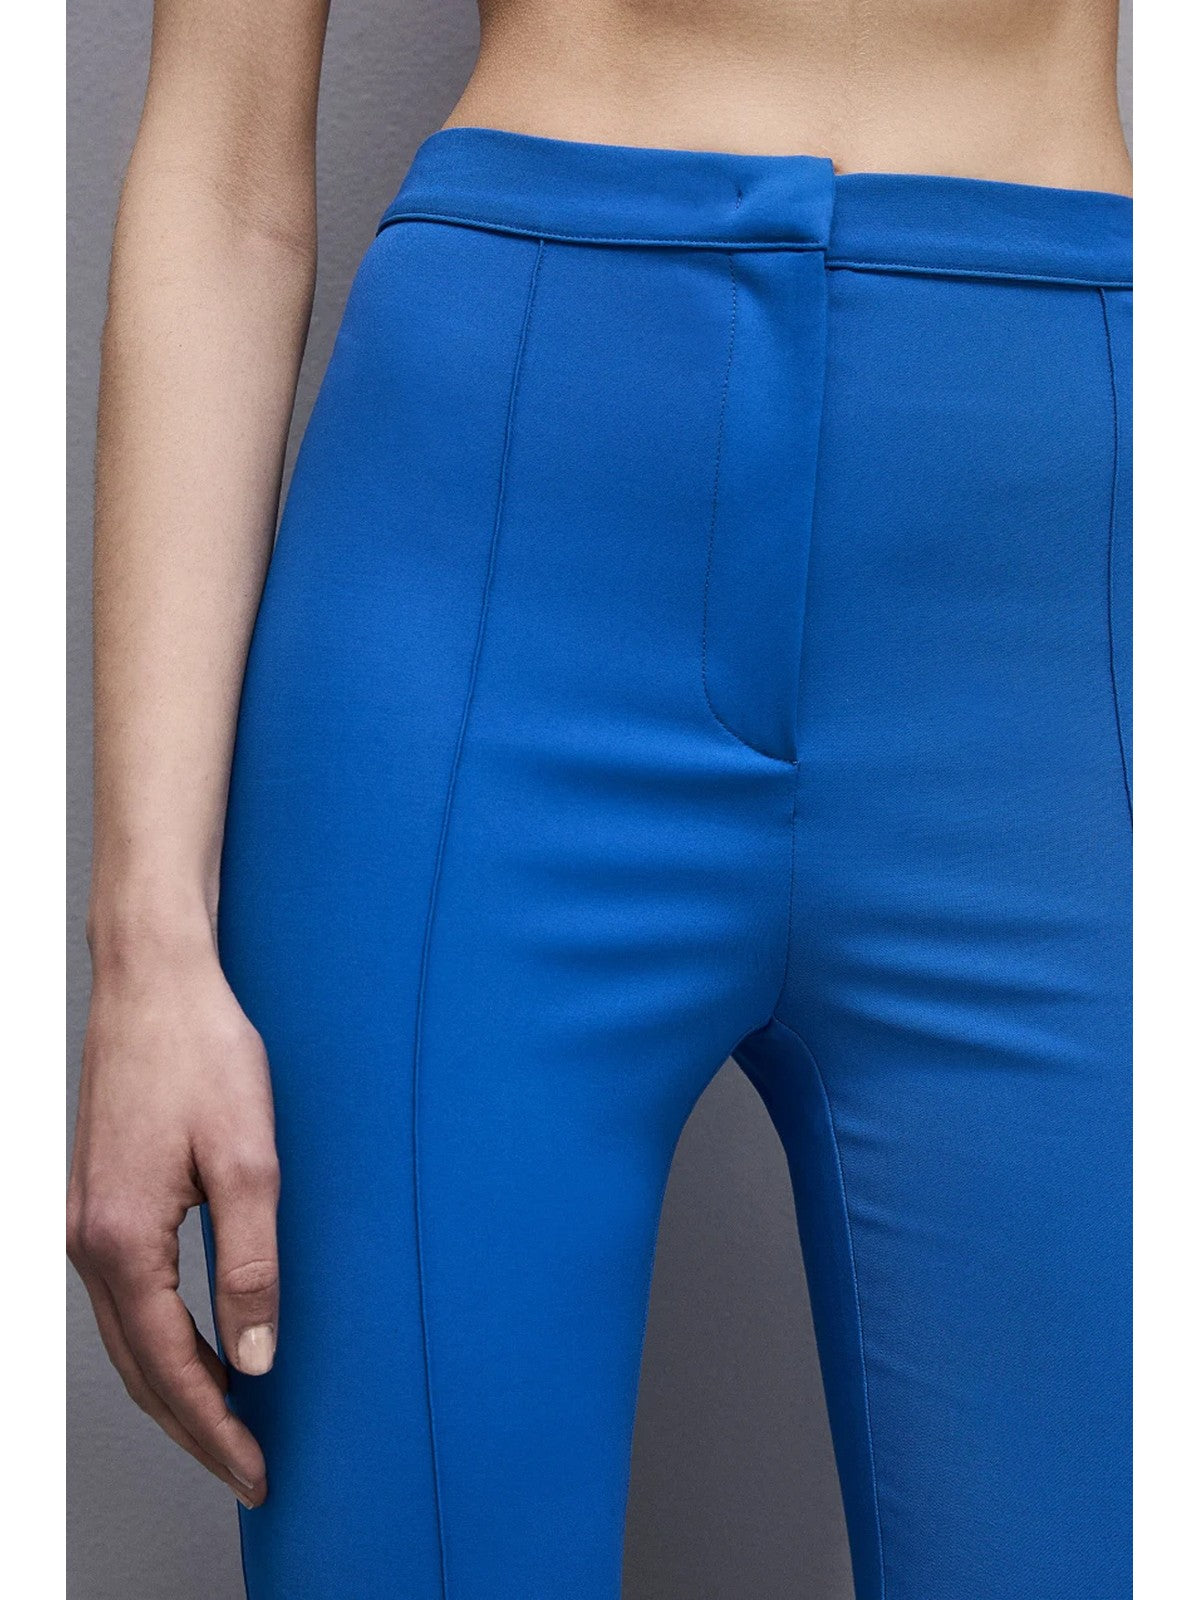 PATRIZIA PEPE Pantalone Donna  CP0208 AQ39 C990 Blu